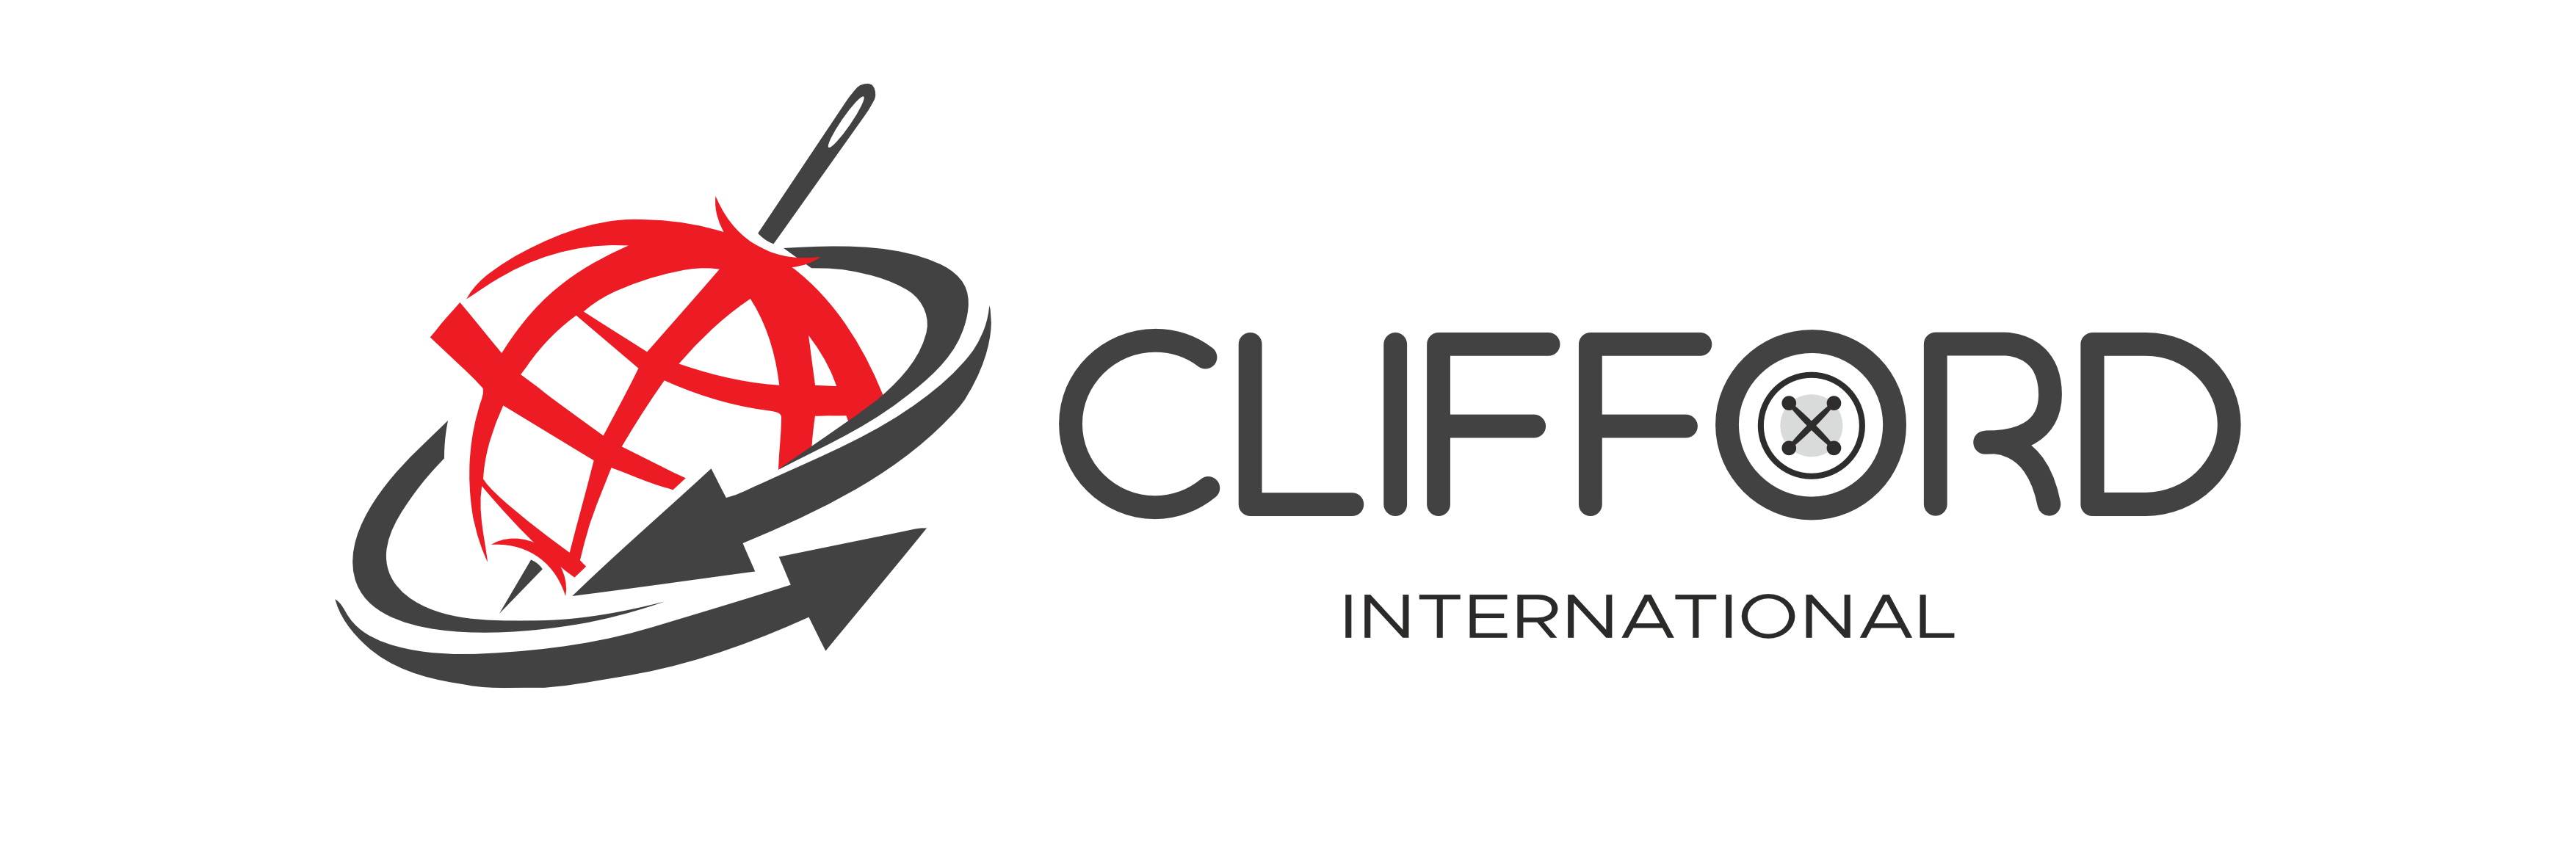 Clifford Logo - Horizontal Black Text